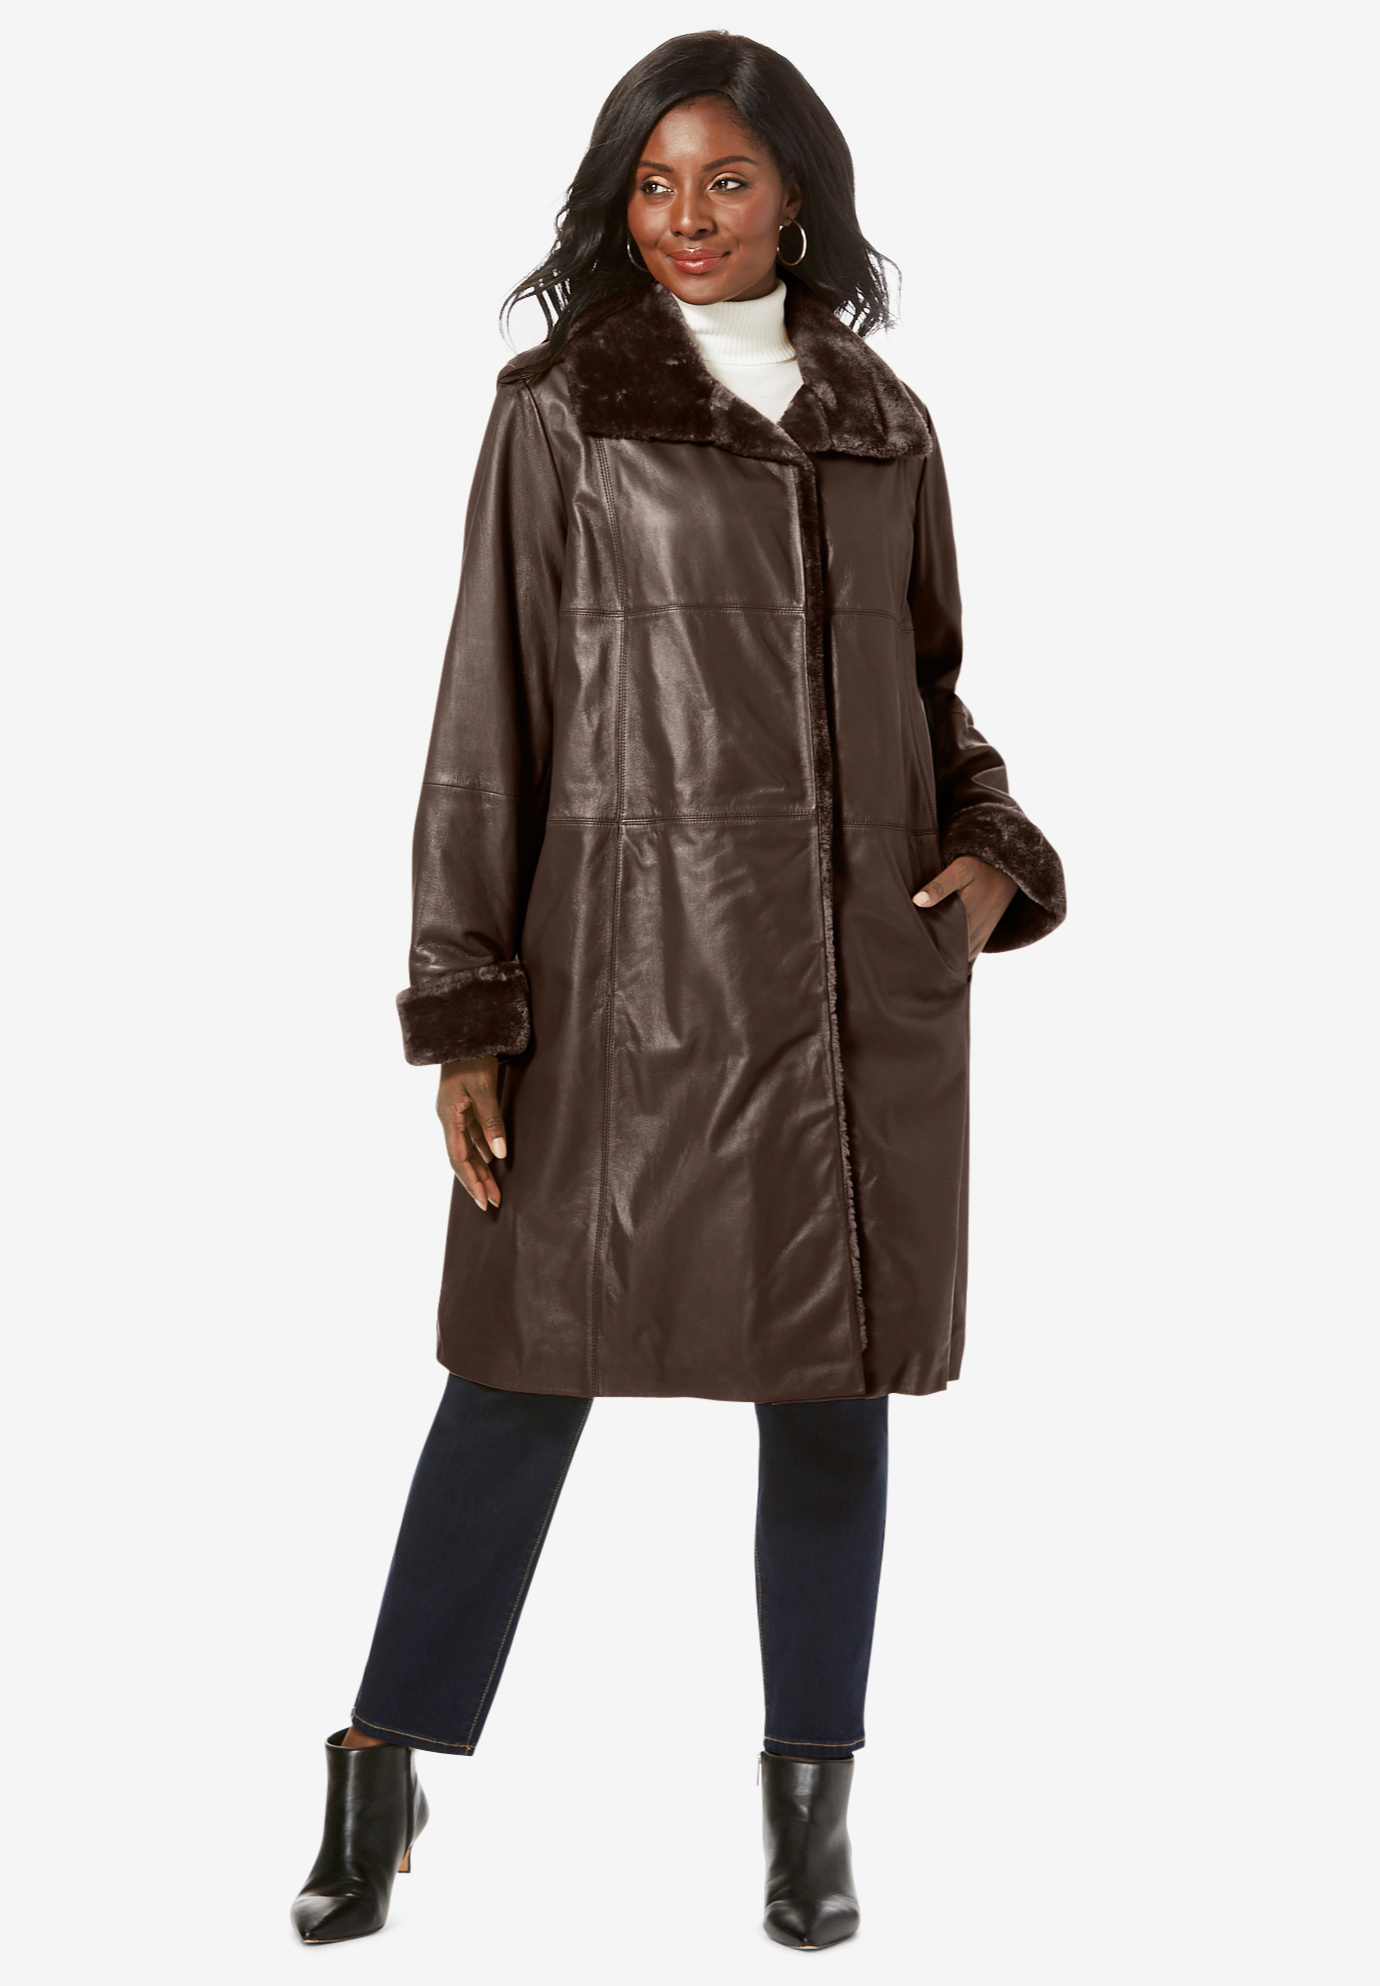 Jessica London Women's Plus Size Fur-Trim Leather Swing Coat | eBay